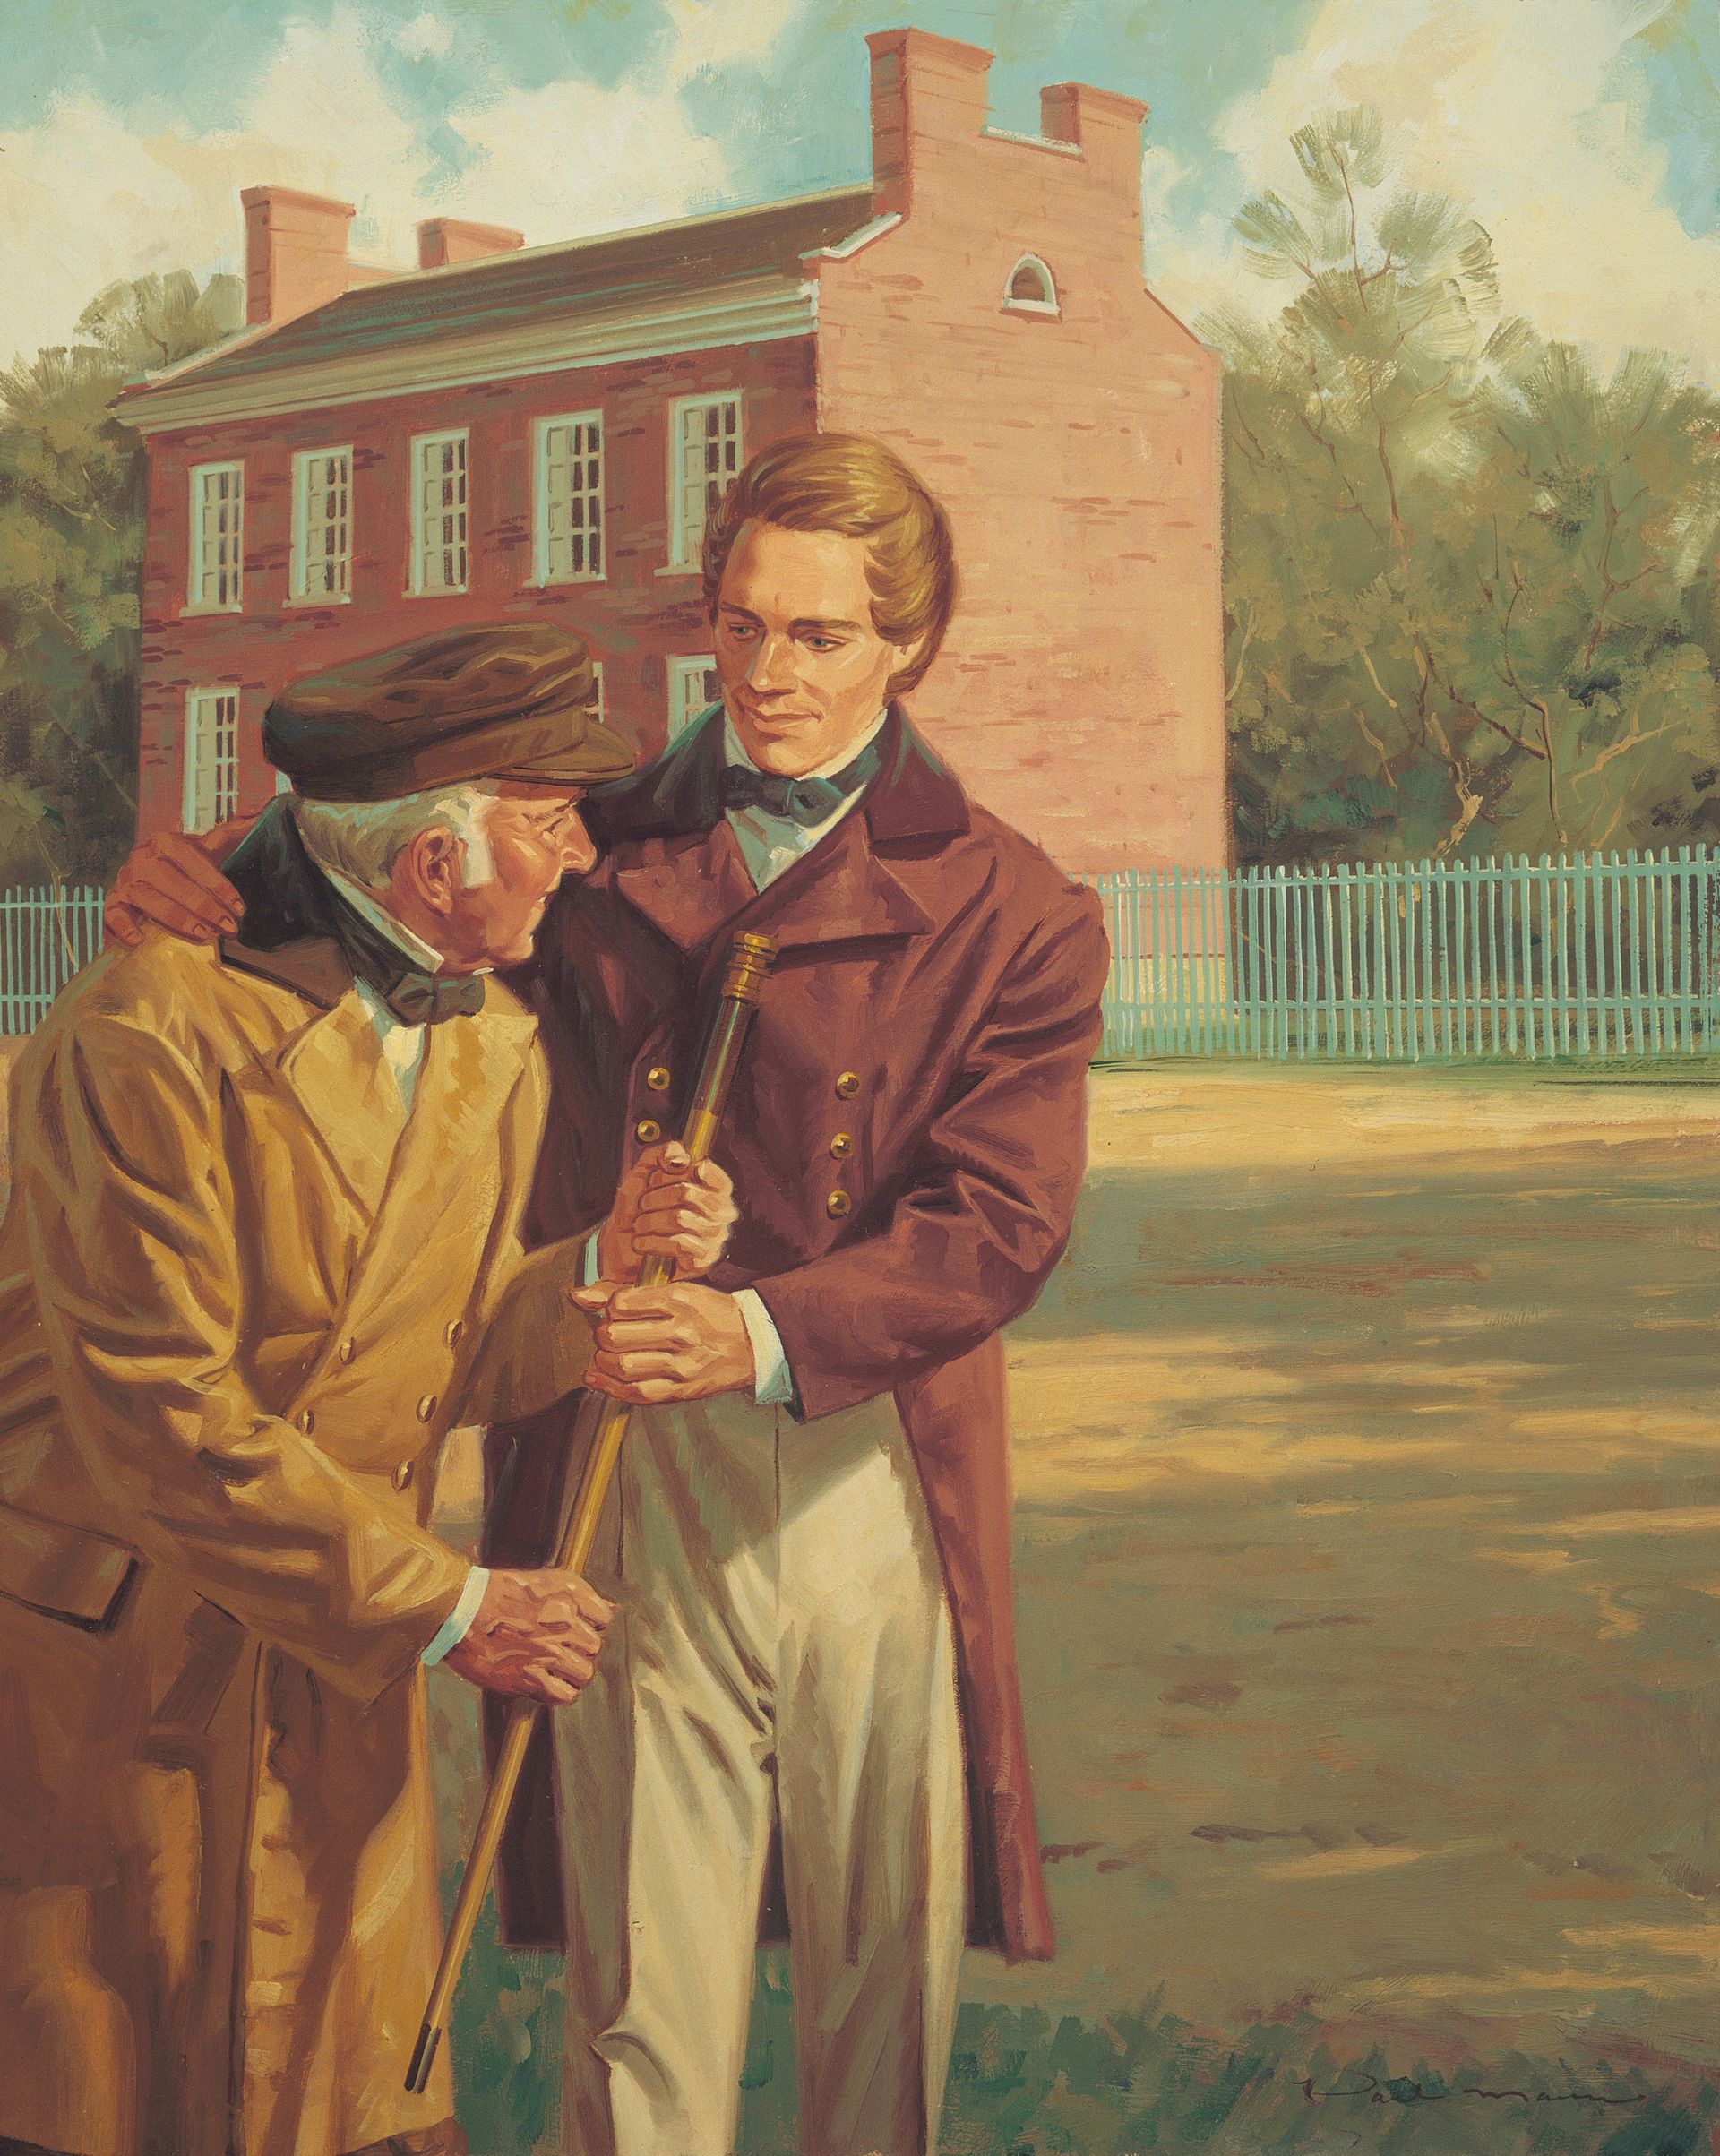 Joseph Smith Giving His Cane to Joseph Knight Sr., by Paul Mann